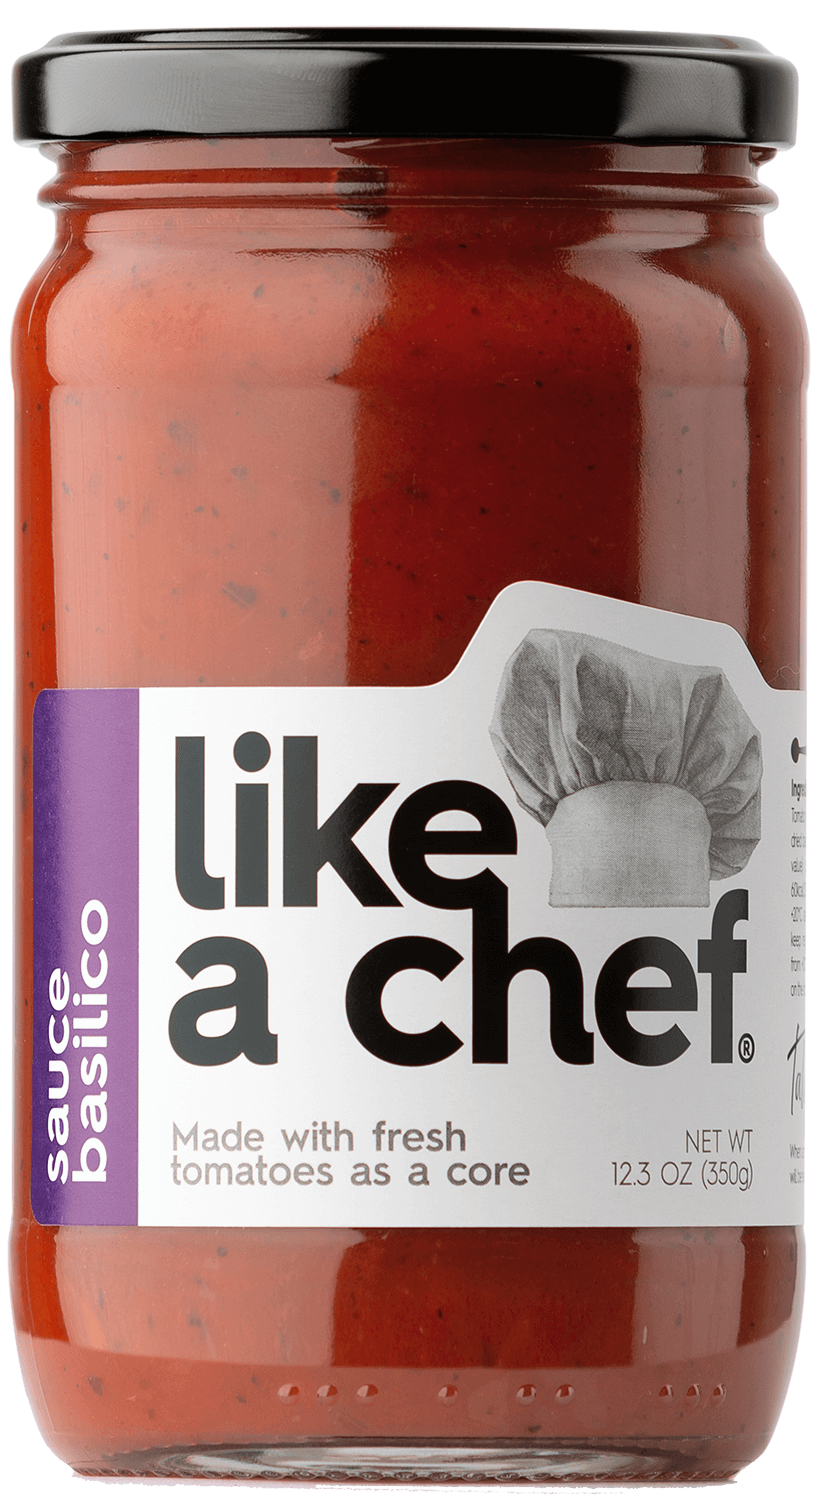 bio idea organic passata basilico sauce 680g Basilico tomato sauce Like a Chef